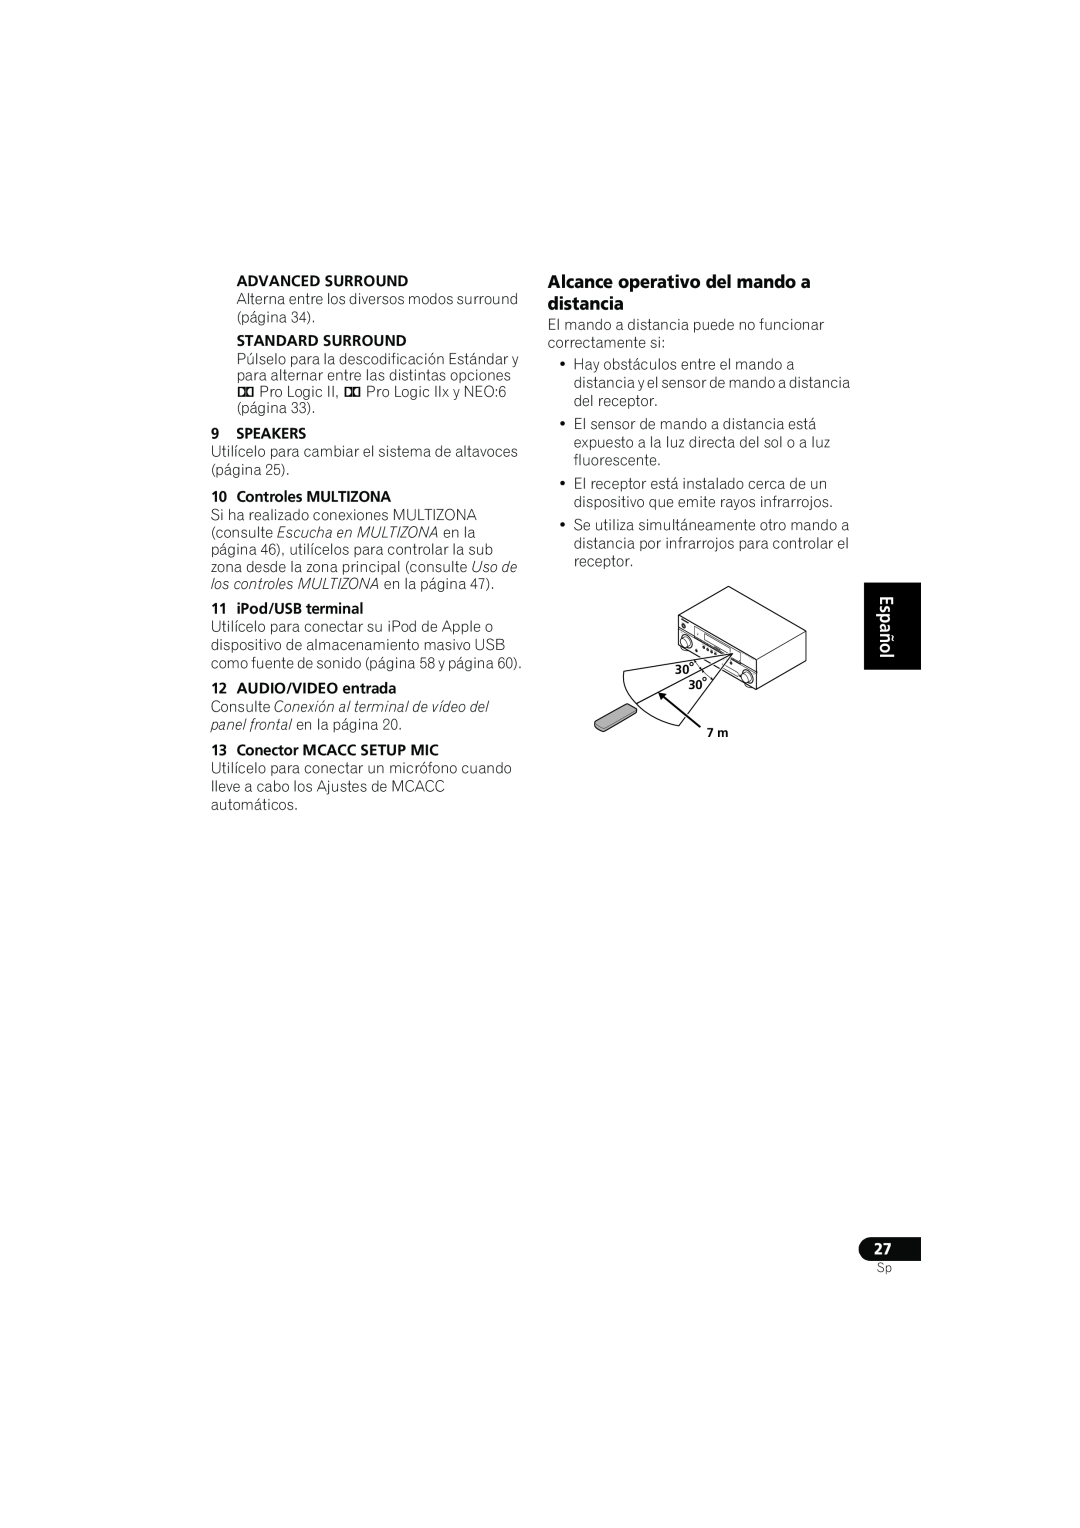 Pioneer VSX-819H manual Alcance operativo del mando a distancia, English Français Español 27, Advanced Surround, Speakers 